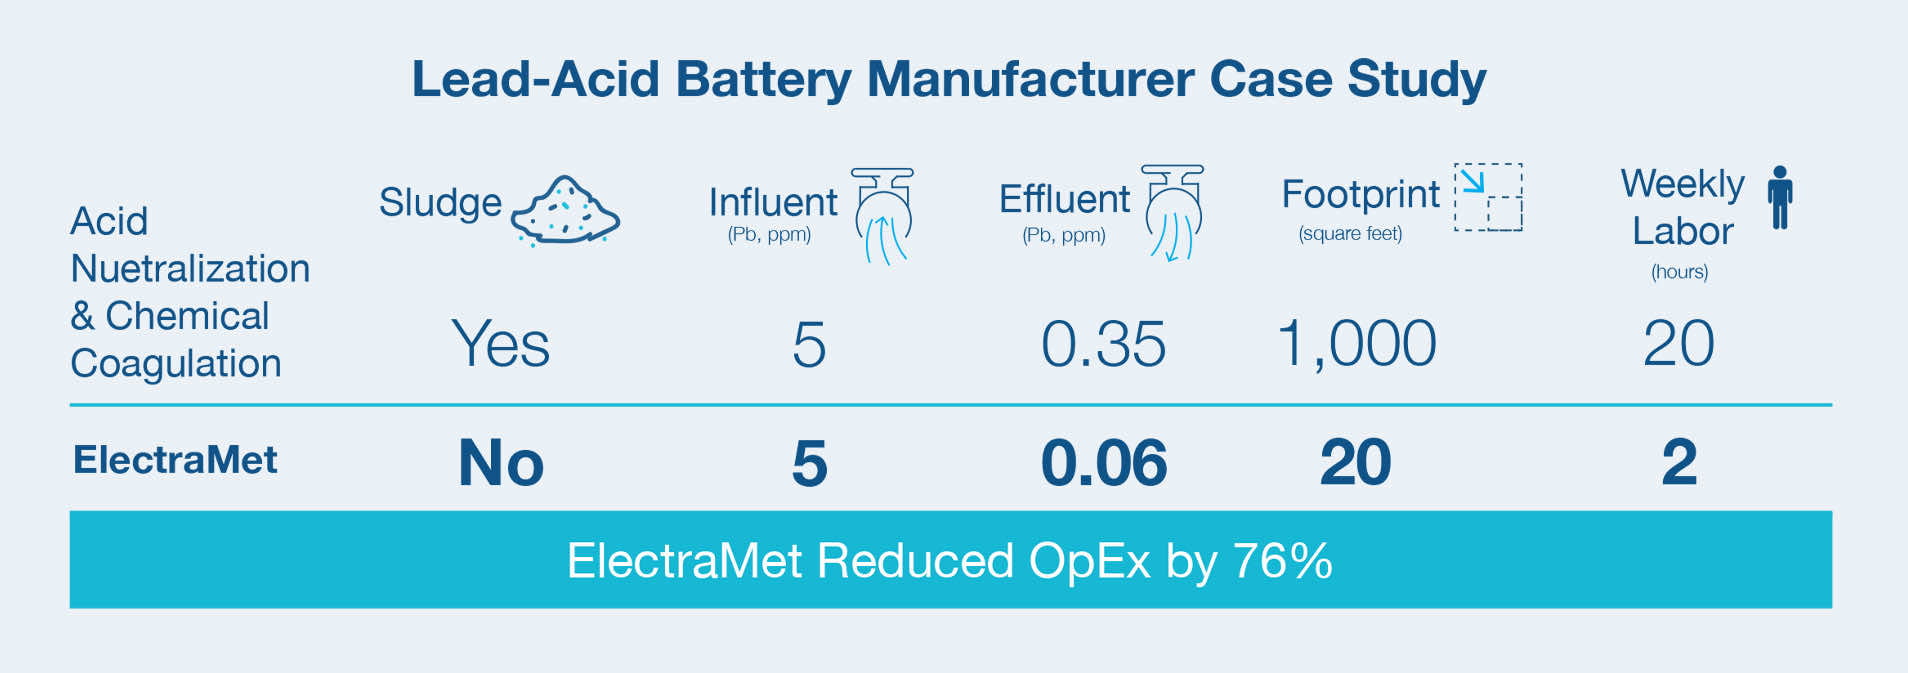 Lead-Acid Battery Manufacturer Case Study